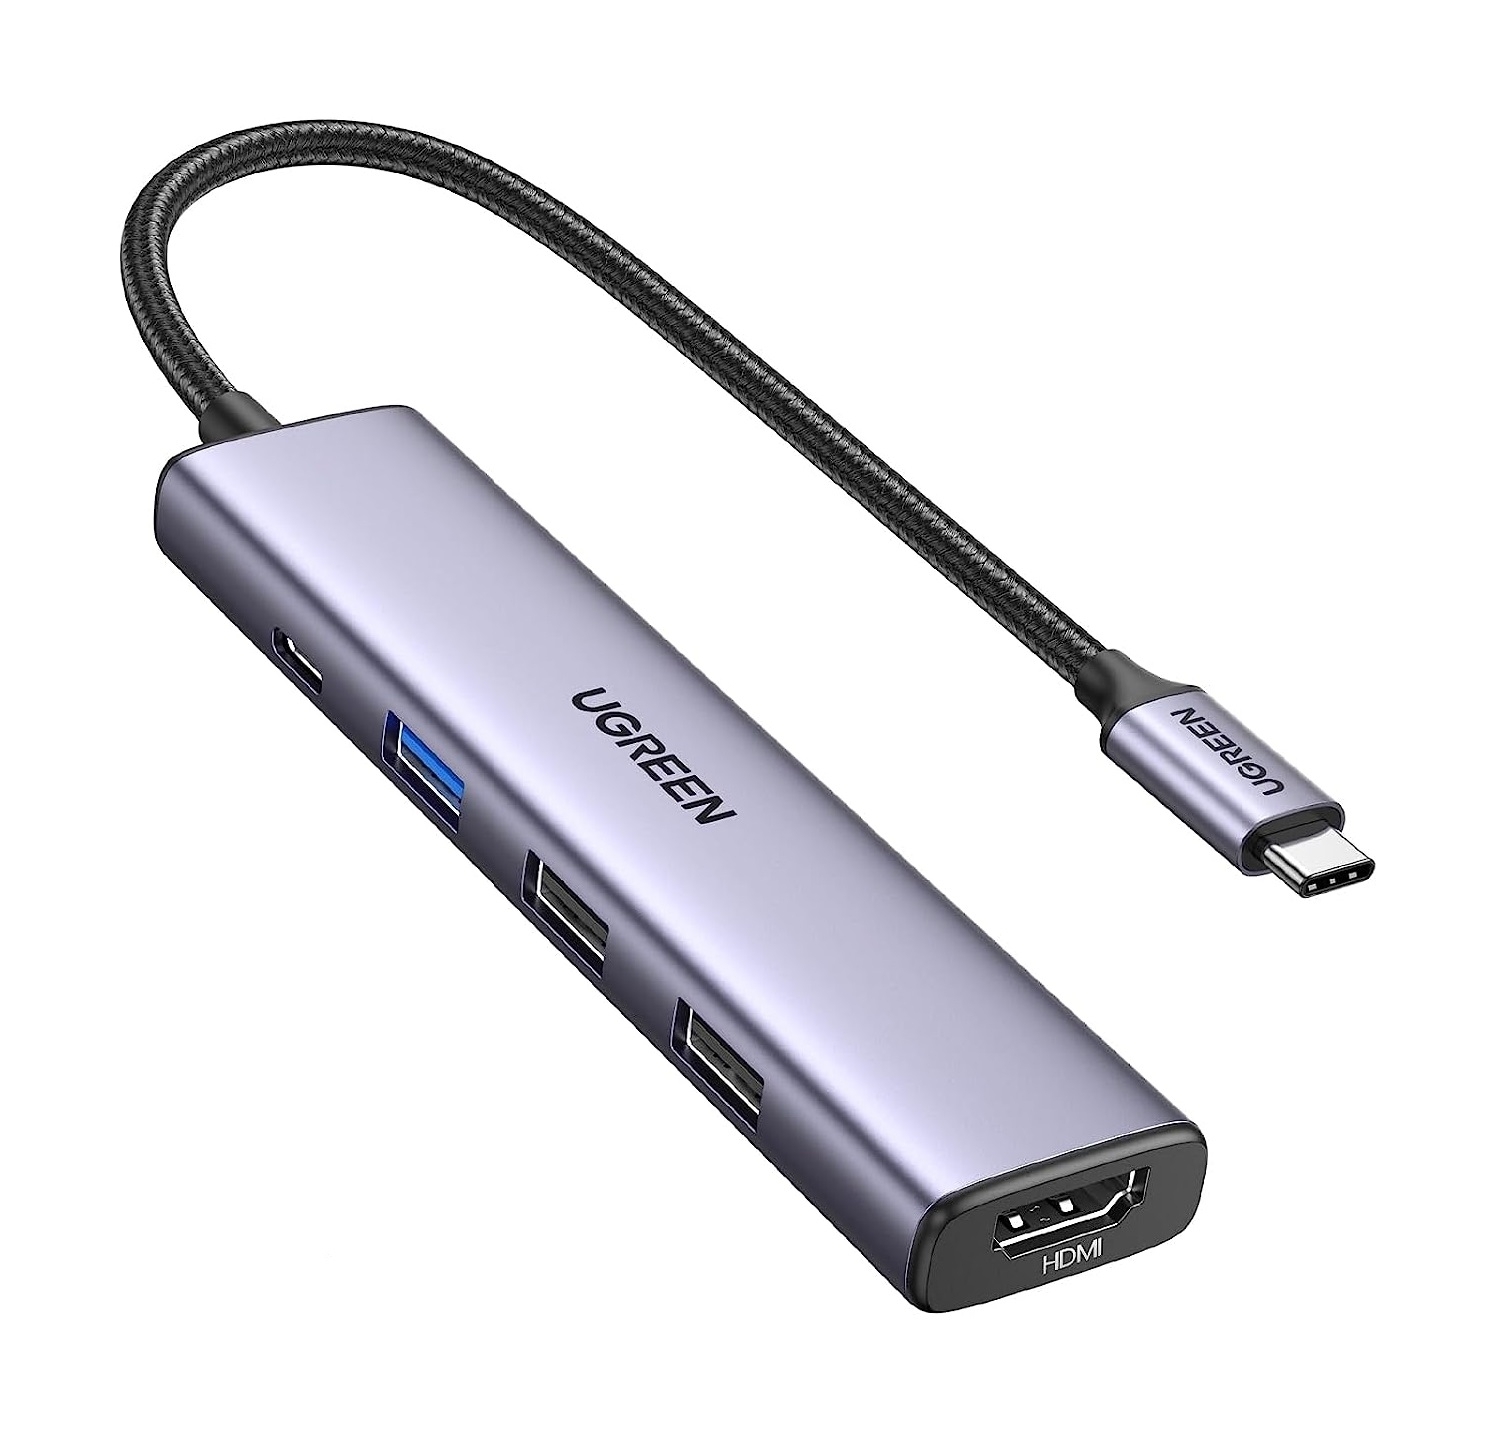 UGREEN 15495 5-in-1 USB-C Hub with 4K HDMI